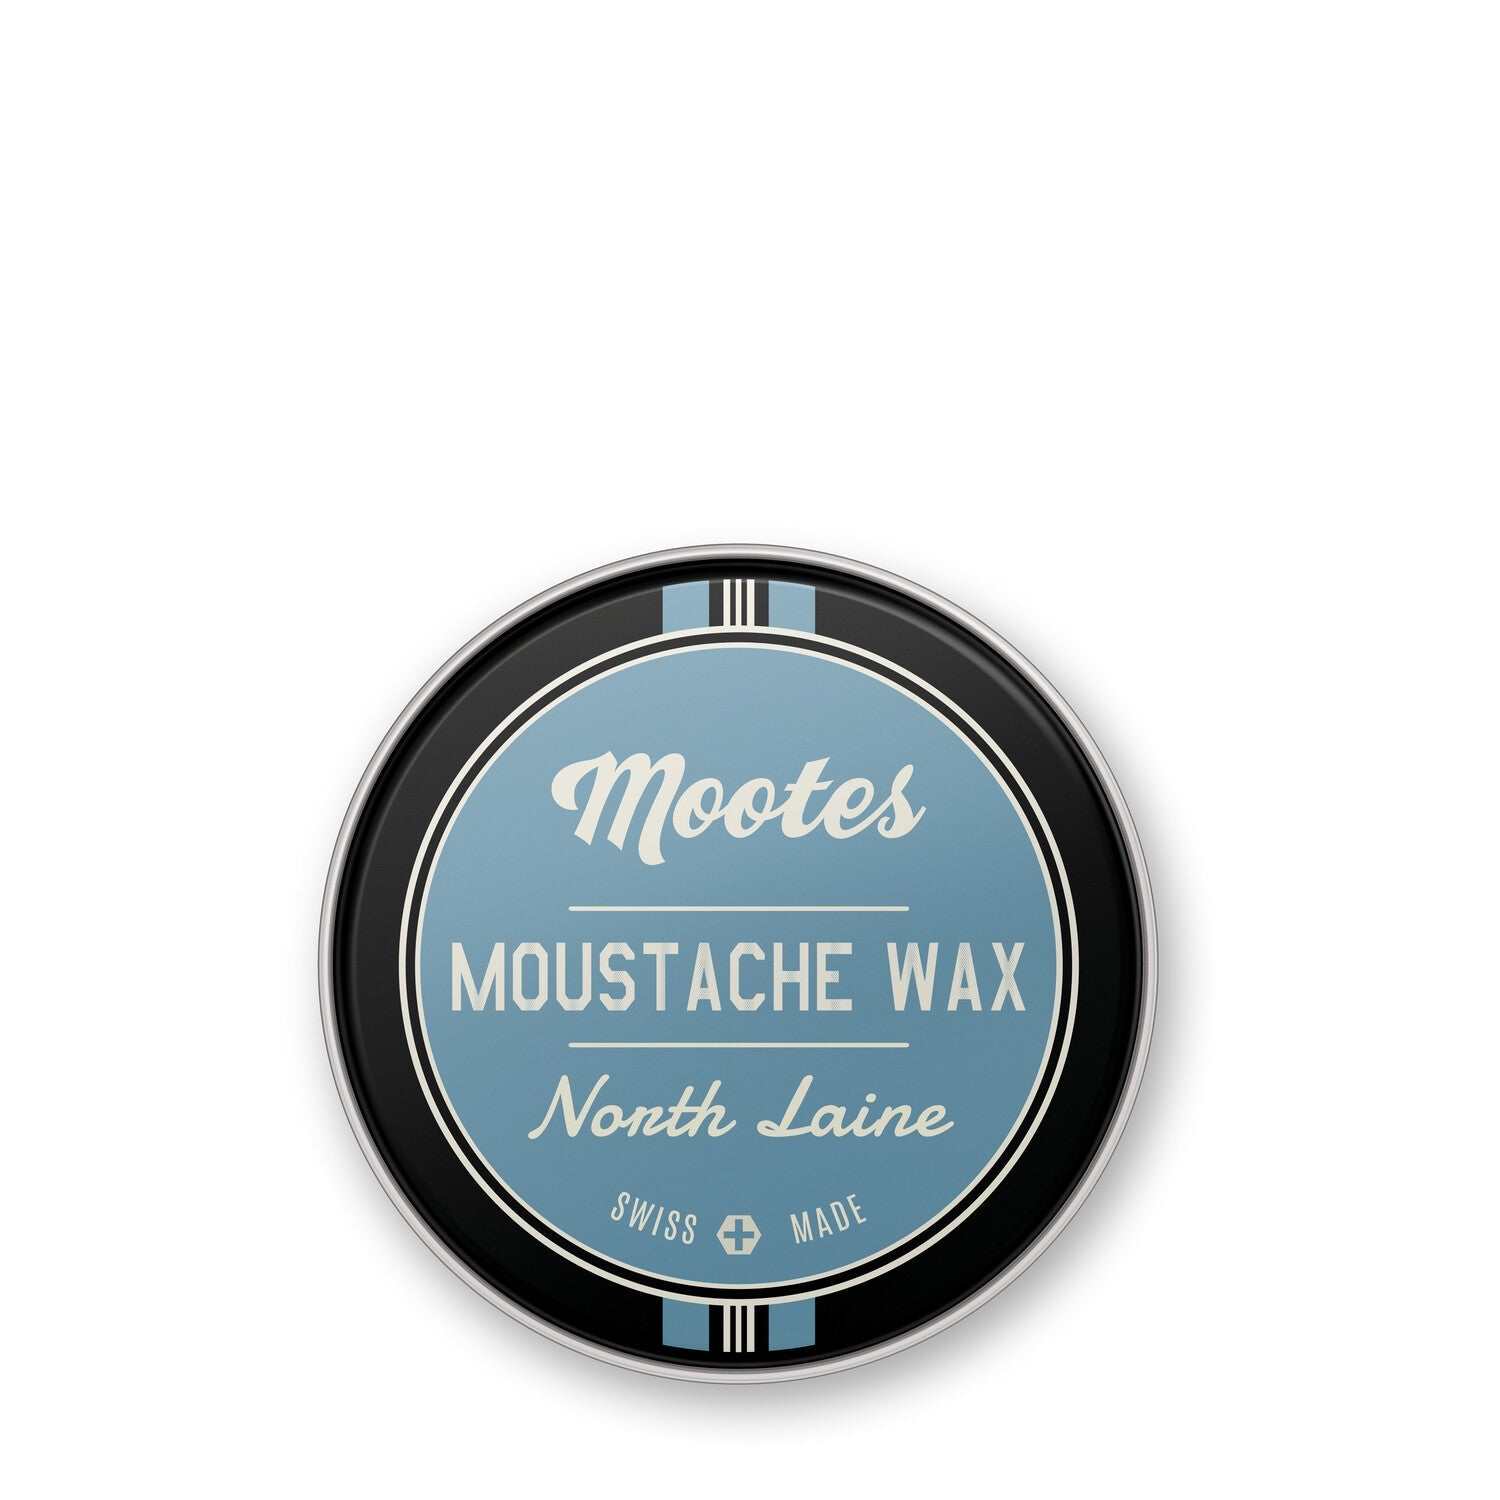 Mootes Moustache Wax North Laine